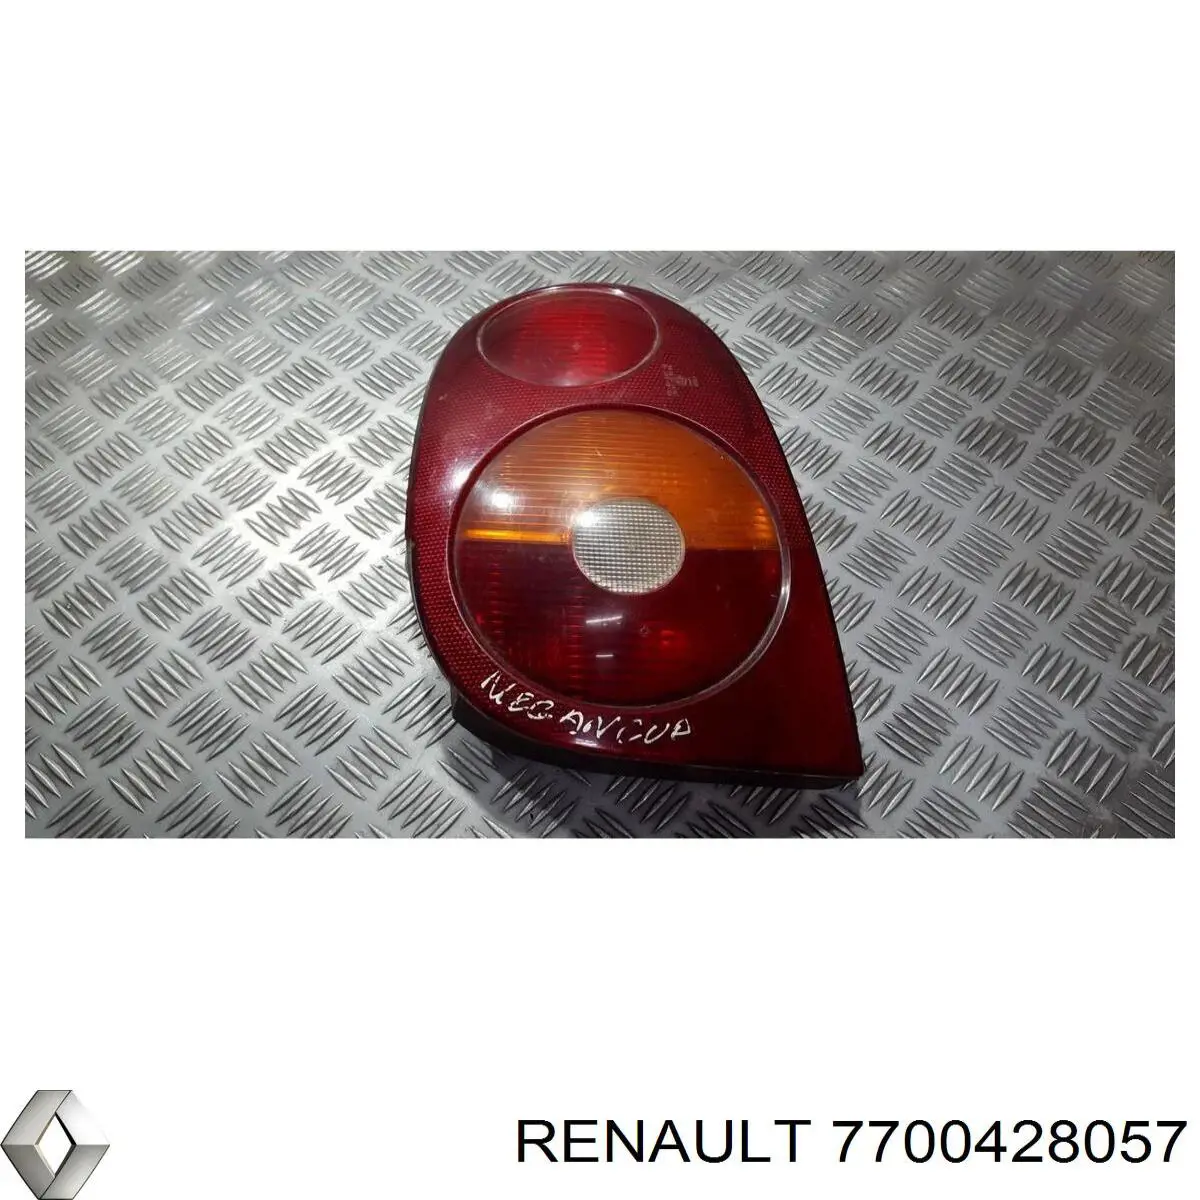 7700428057 Renault (RVI) lanterna traseira direita externa